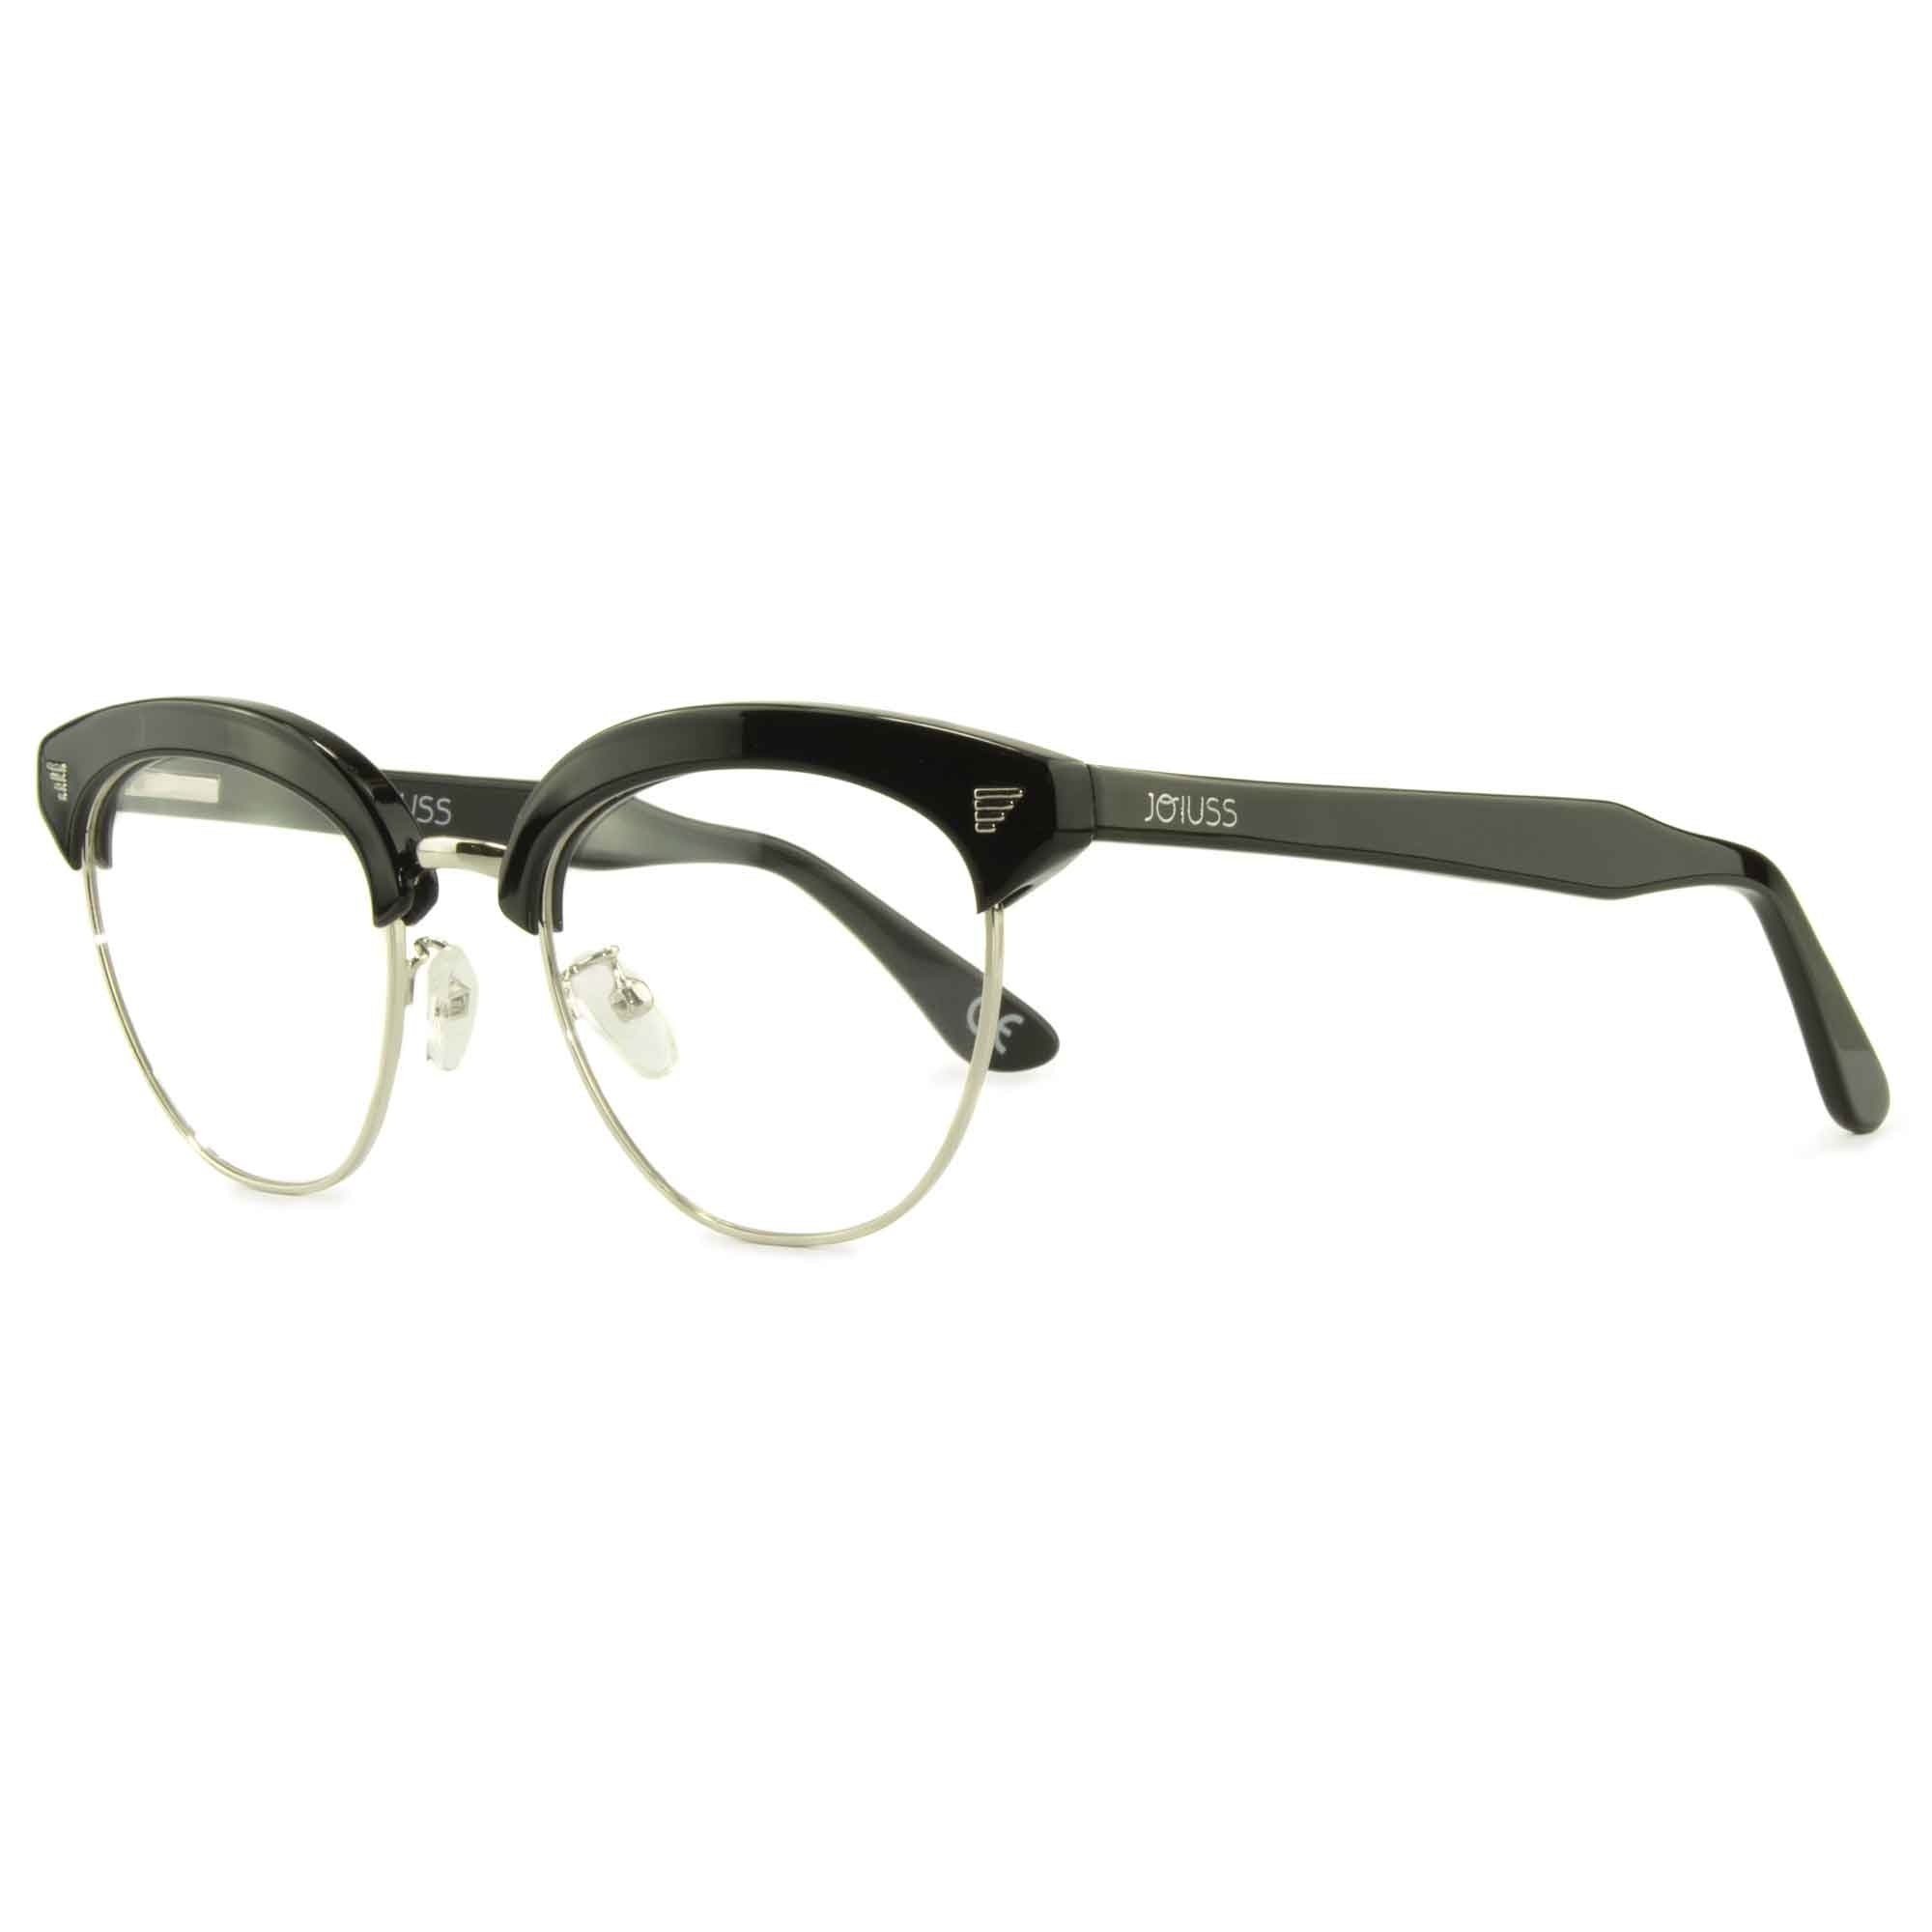 Browline Glasses Frames - Black - Malcolm